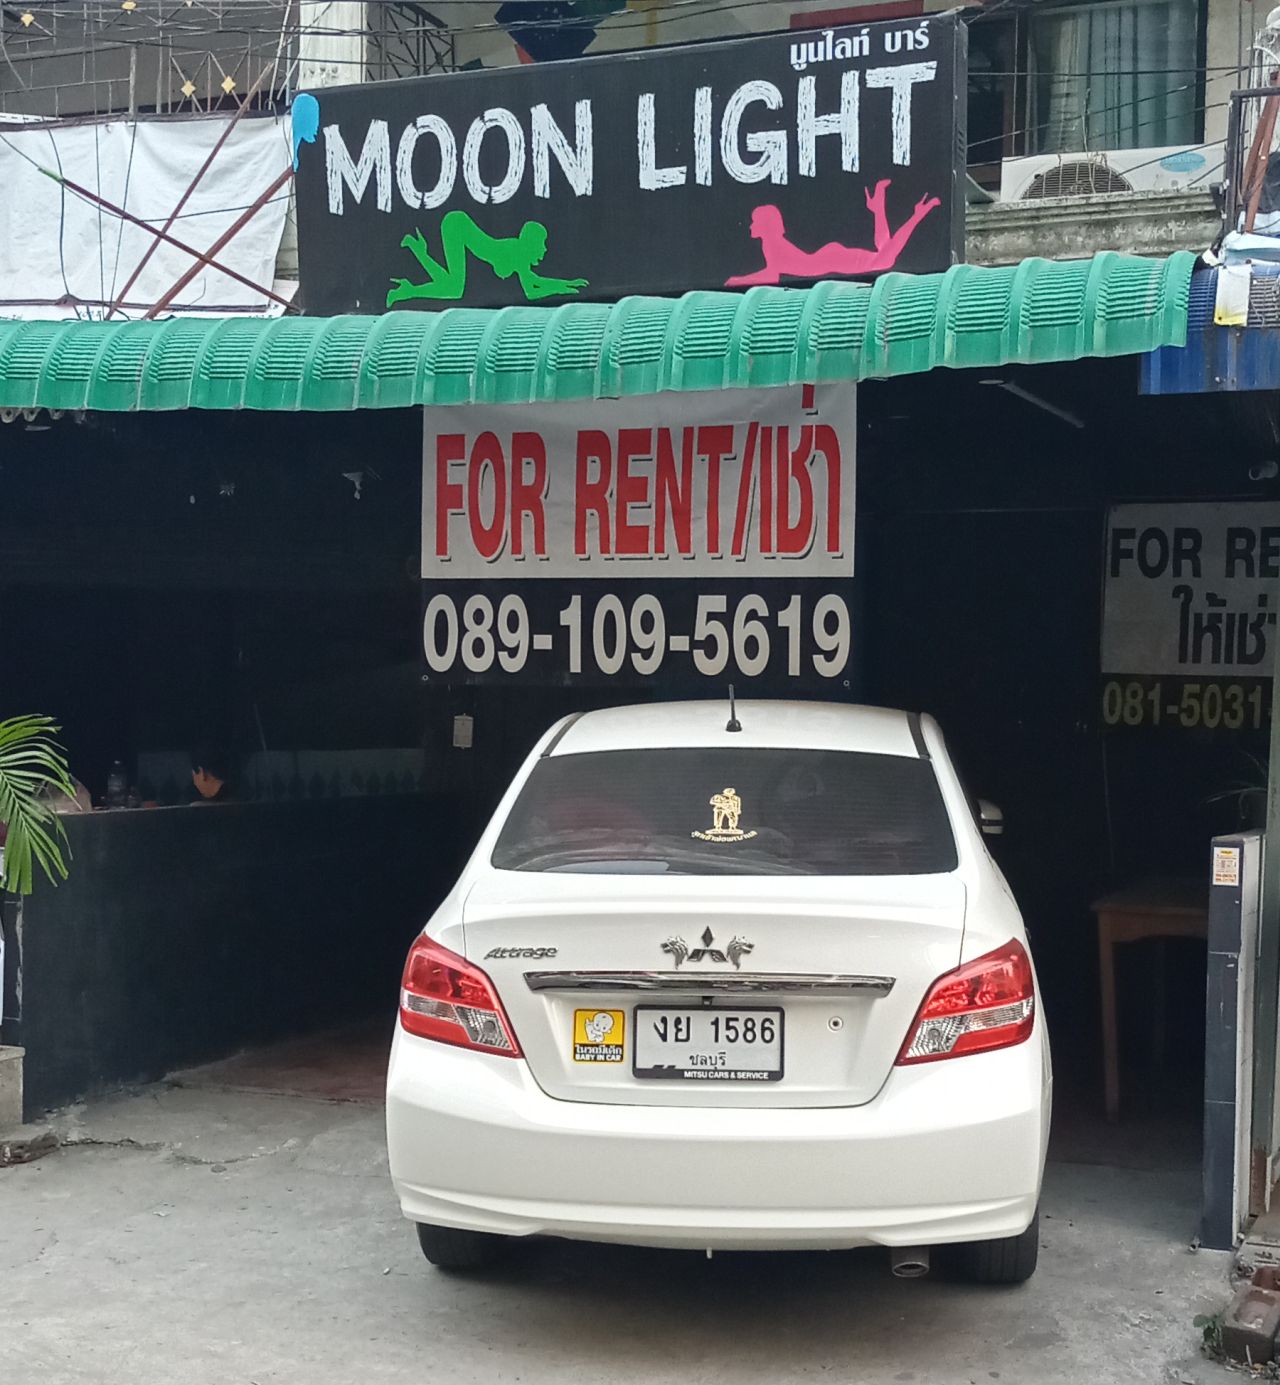 Moonlight A Go-Go for rent